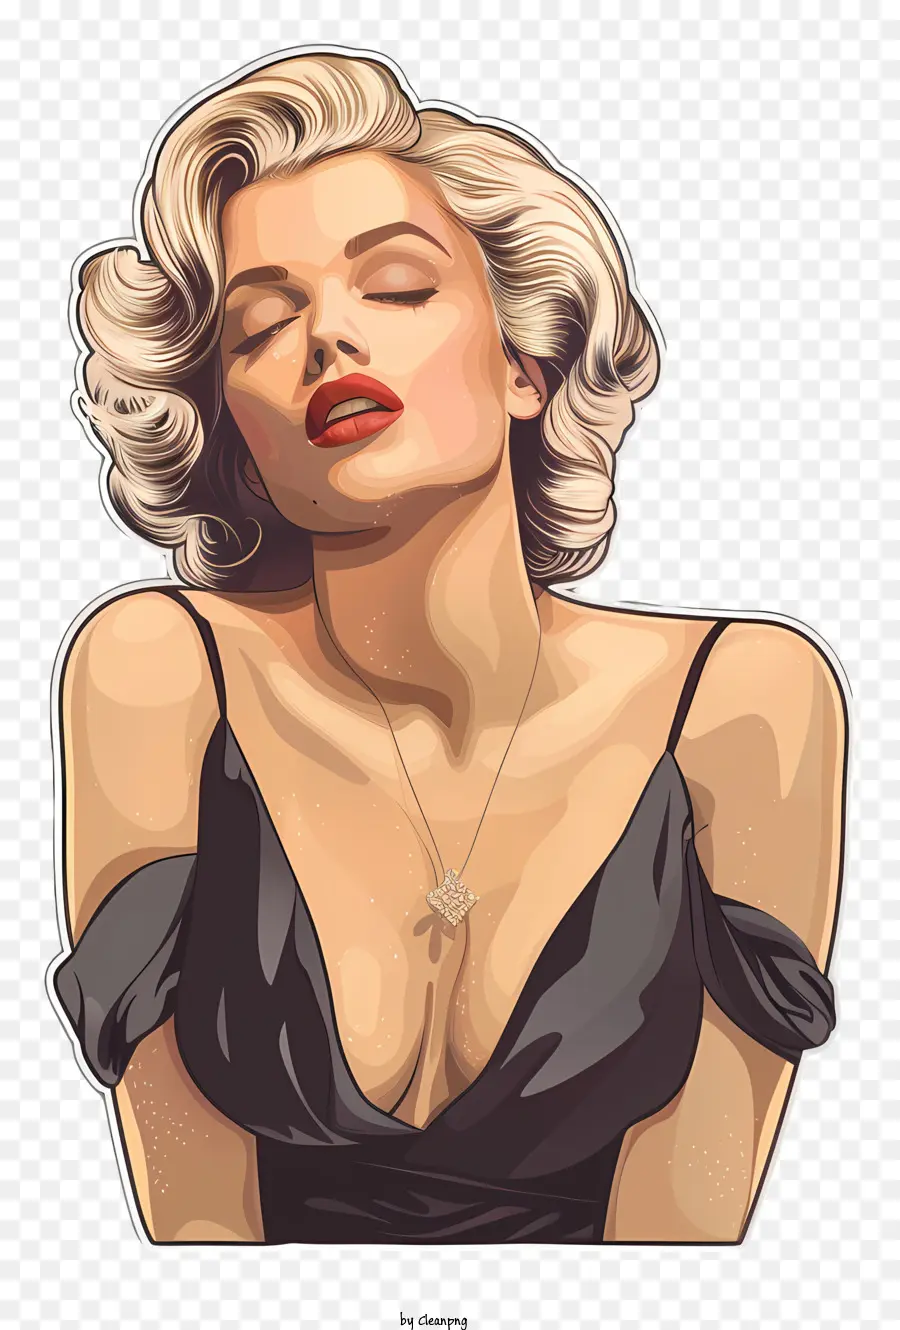 Marilyn Monroe dunkle Haare rote Lippen schwarzes Kleid offener Rücken - Mysteriöse Frau im schwarzen Kleid, tiefes Denken